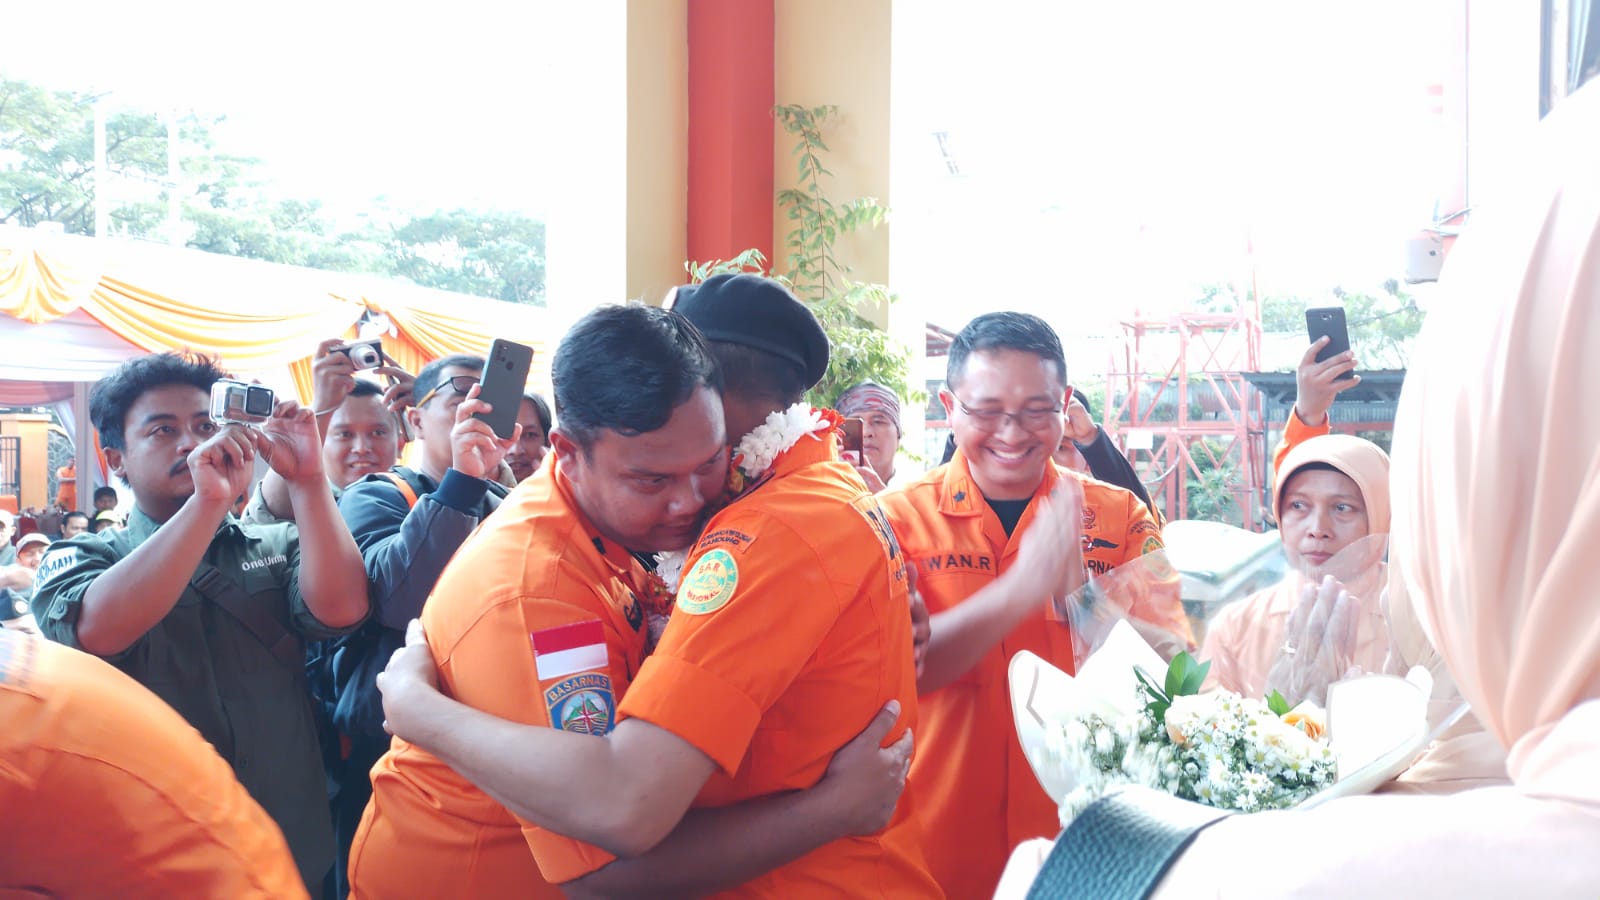 Mantan Kepala Kantor SAR Bandung, Deden Ridwansah yang kini menjabat sebagai Kepala Kantor SAR Lampung saat perpisahan bersama anggota Basarnas Kantor SAR Bandung. (Yanuar/Jabar Ekspres)